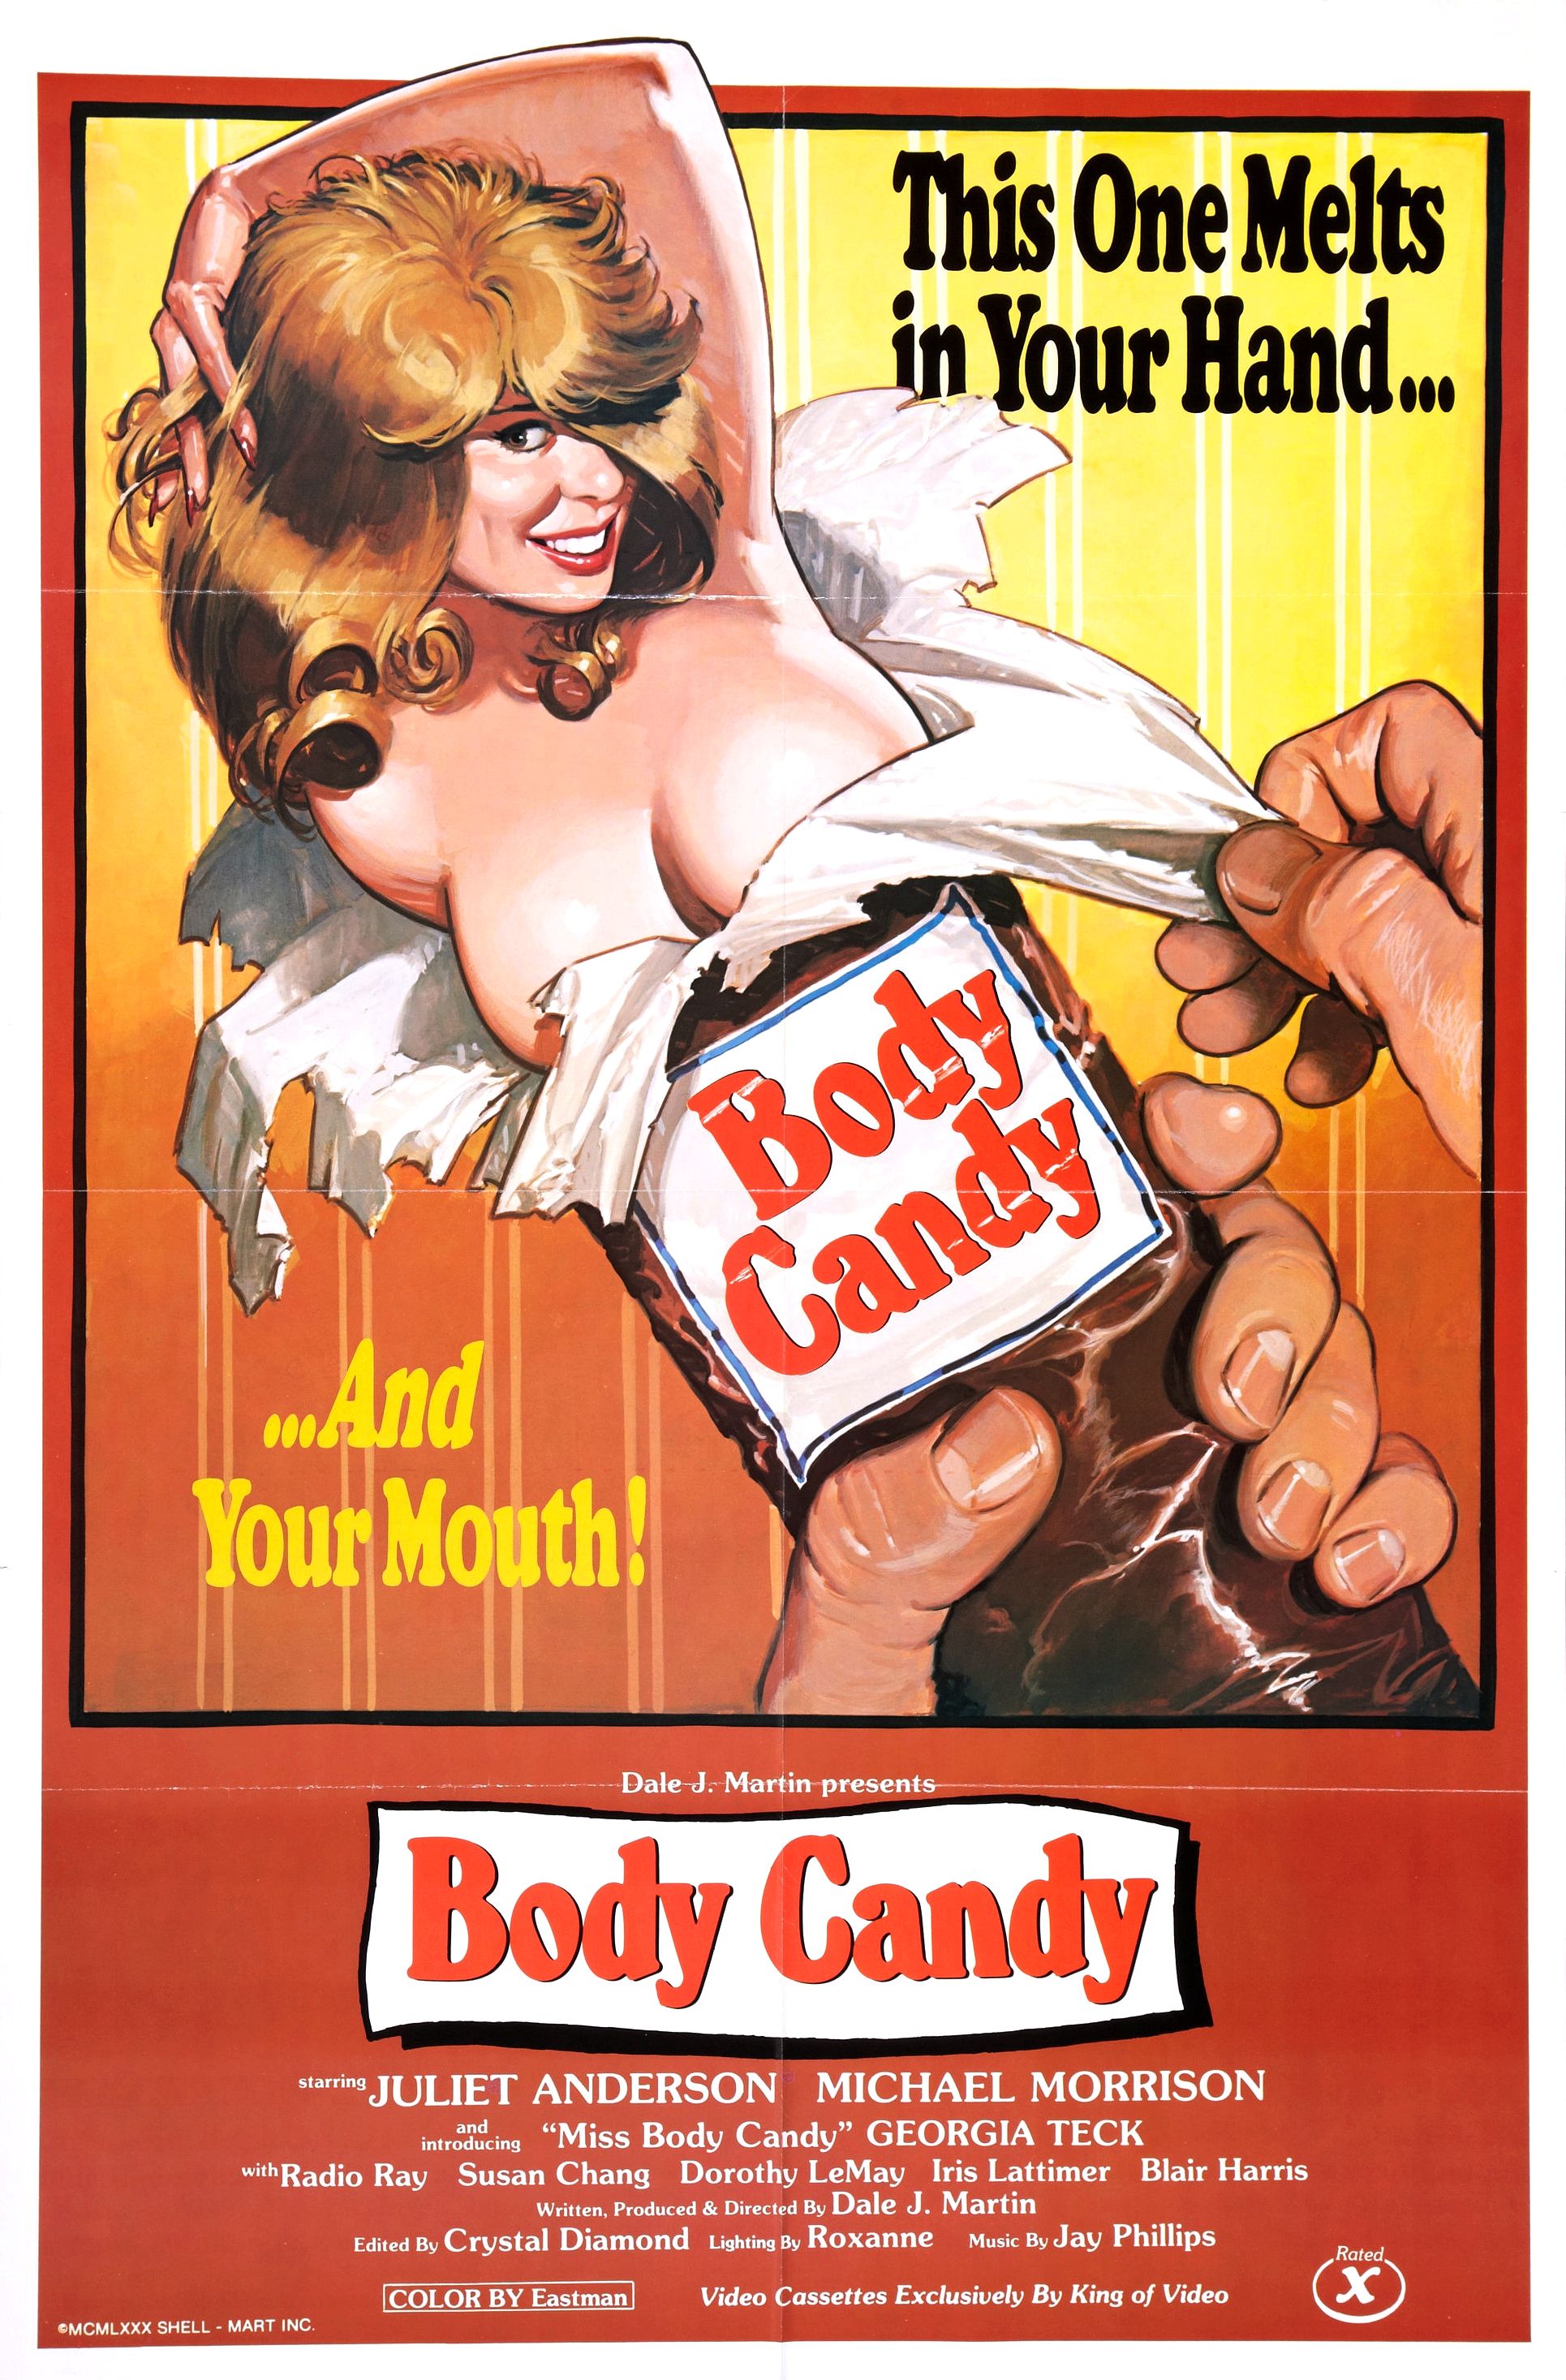 70s Porn Movie Posters - 6 - Vintage Adult Film Posters